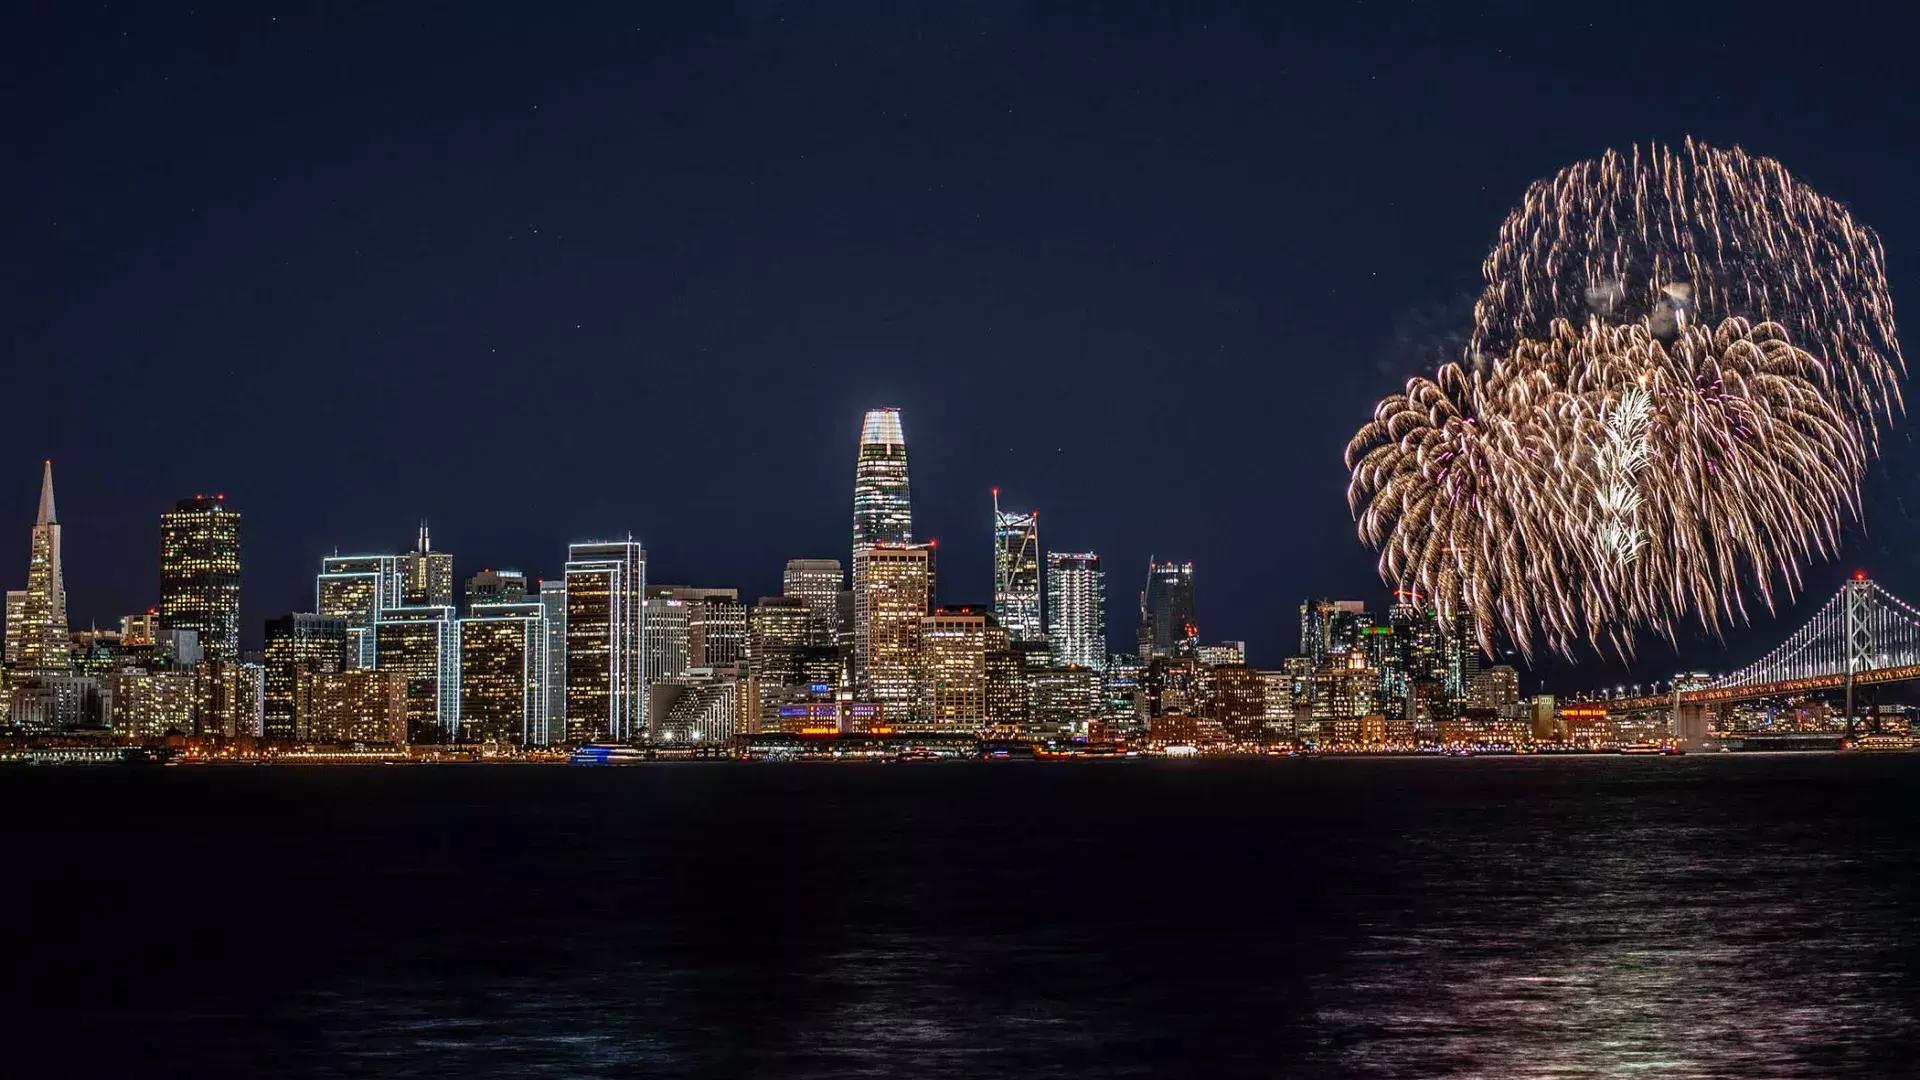 Fireworks explode over the San Francisco city skyline.